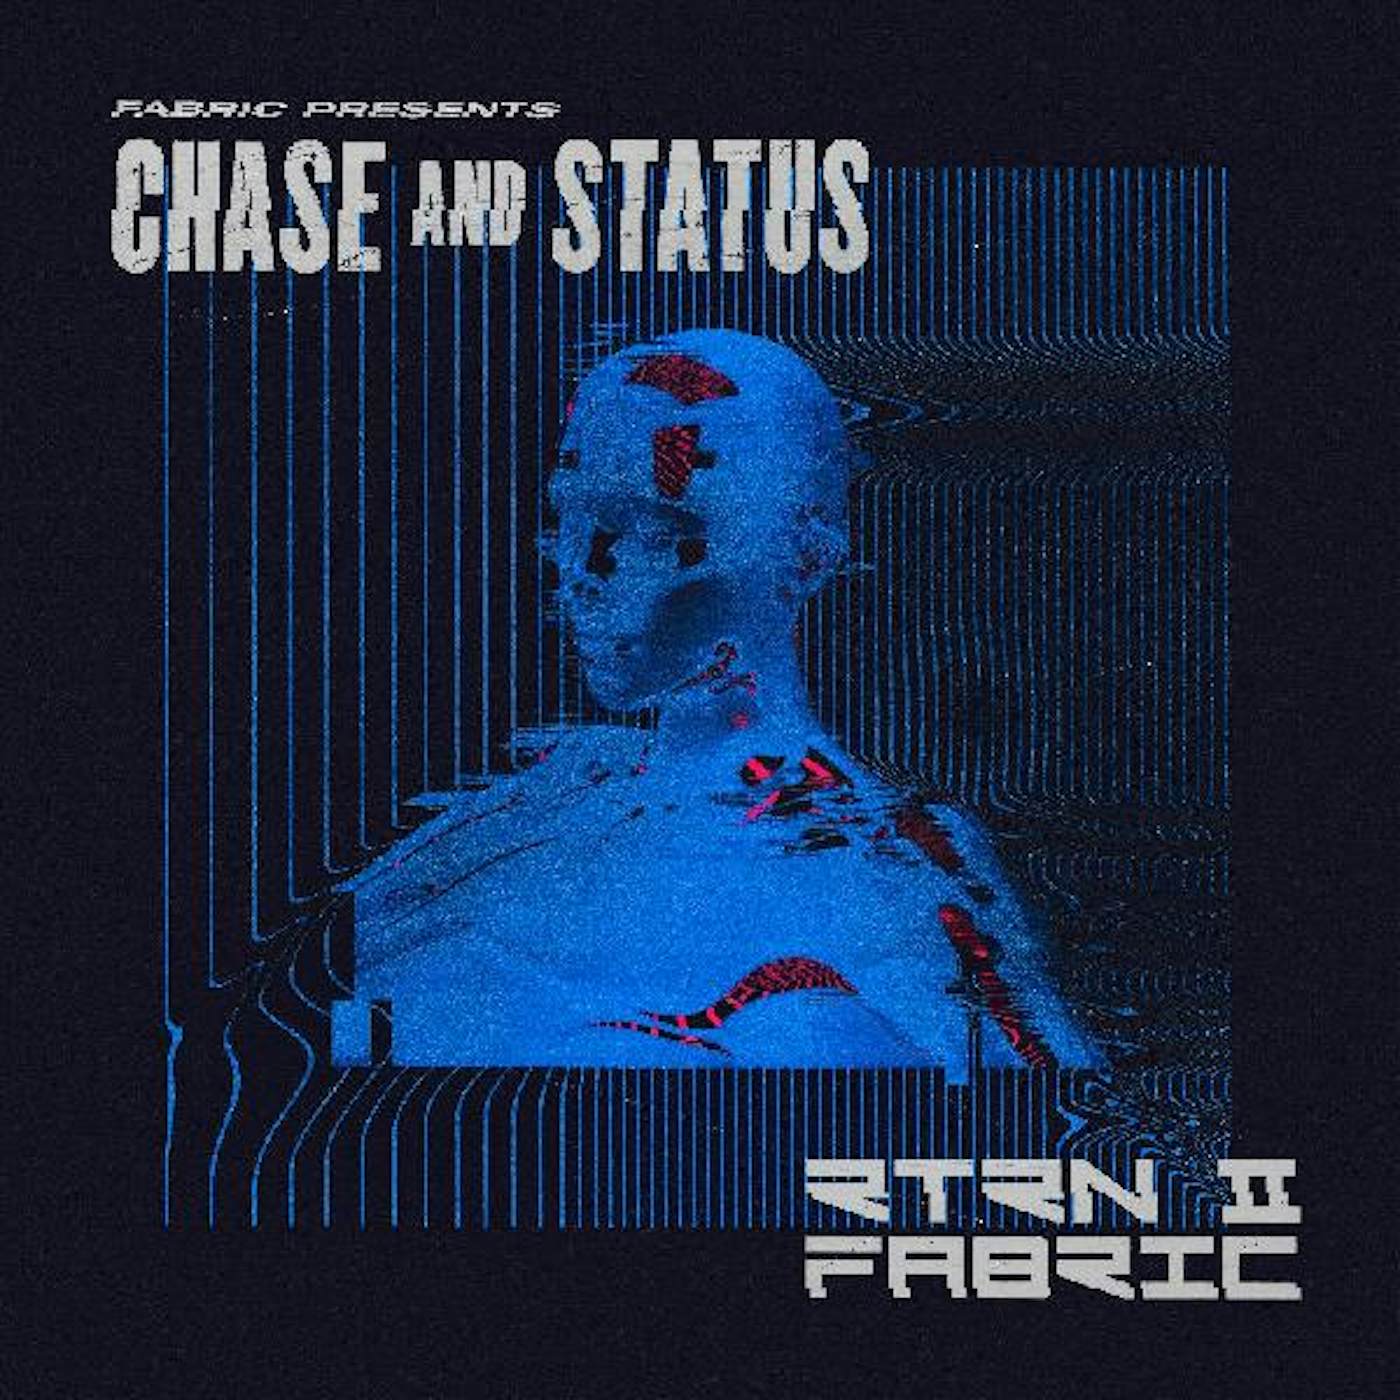 Chase & Status Rtrns Ii Fabric Vinyl Record